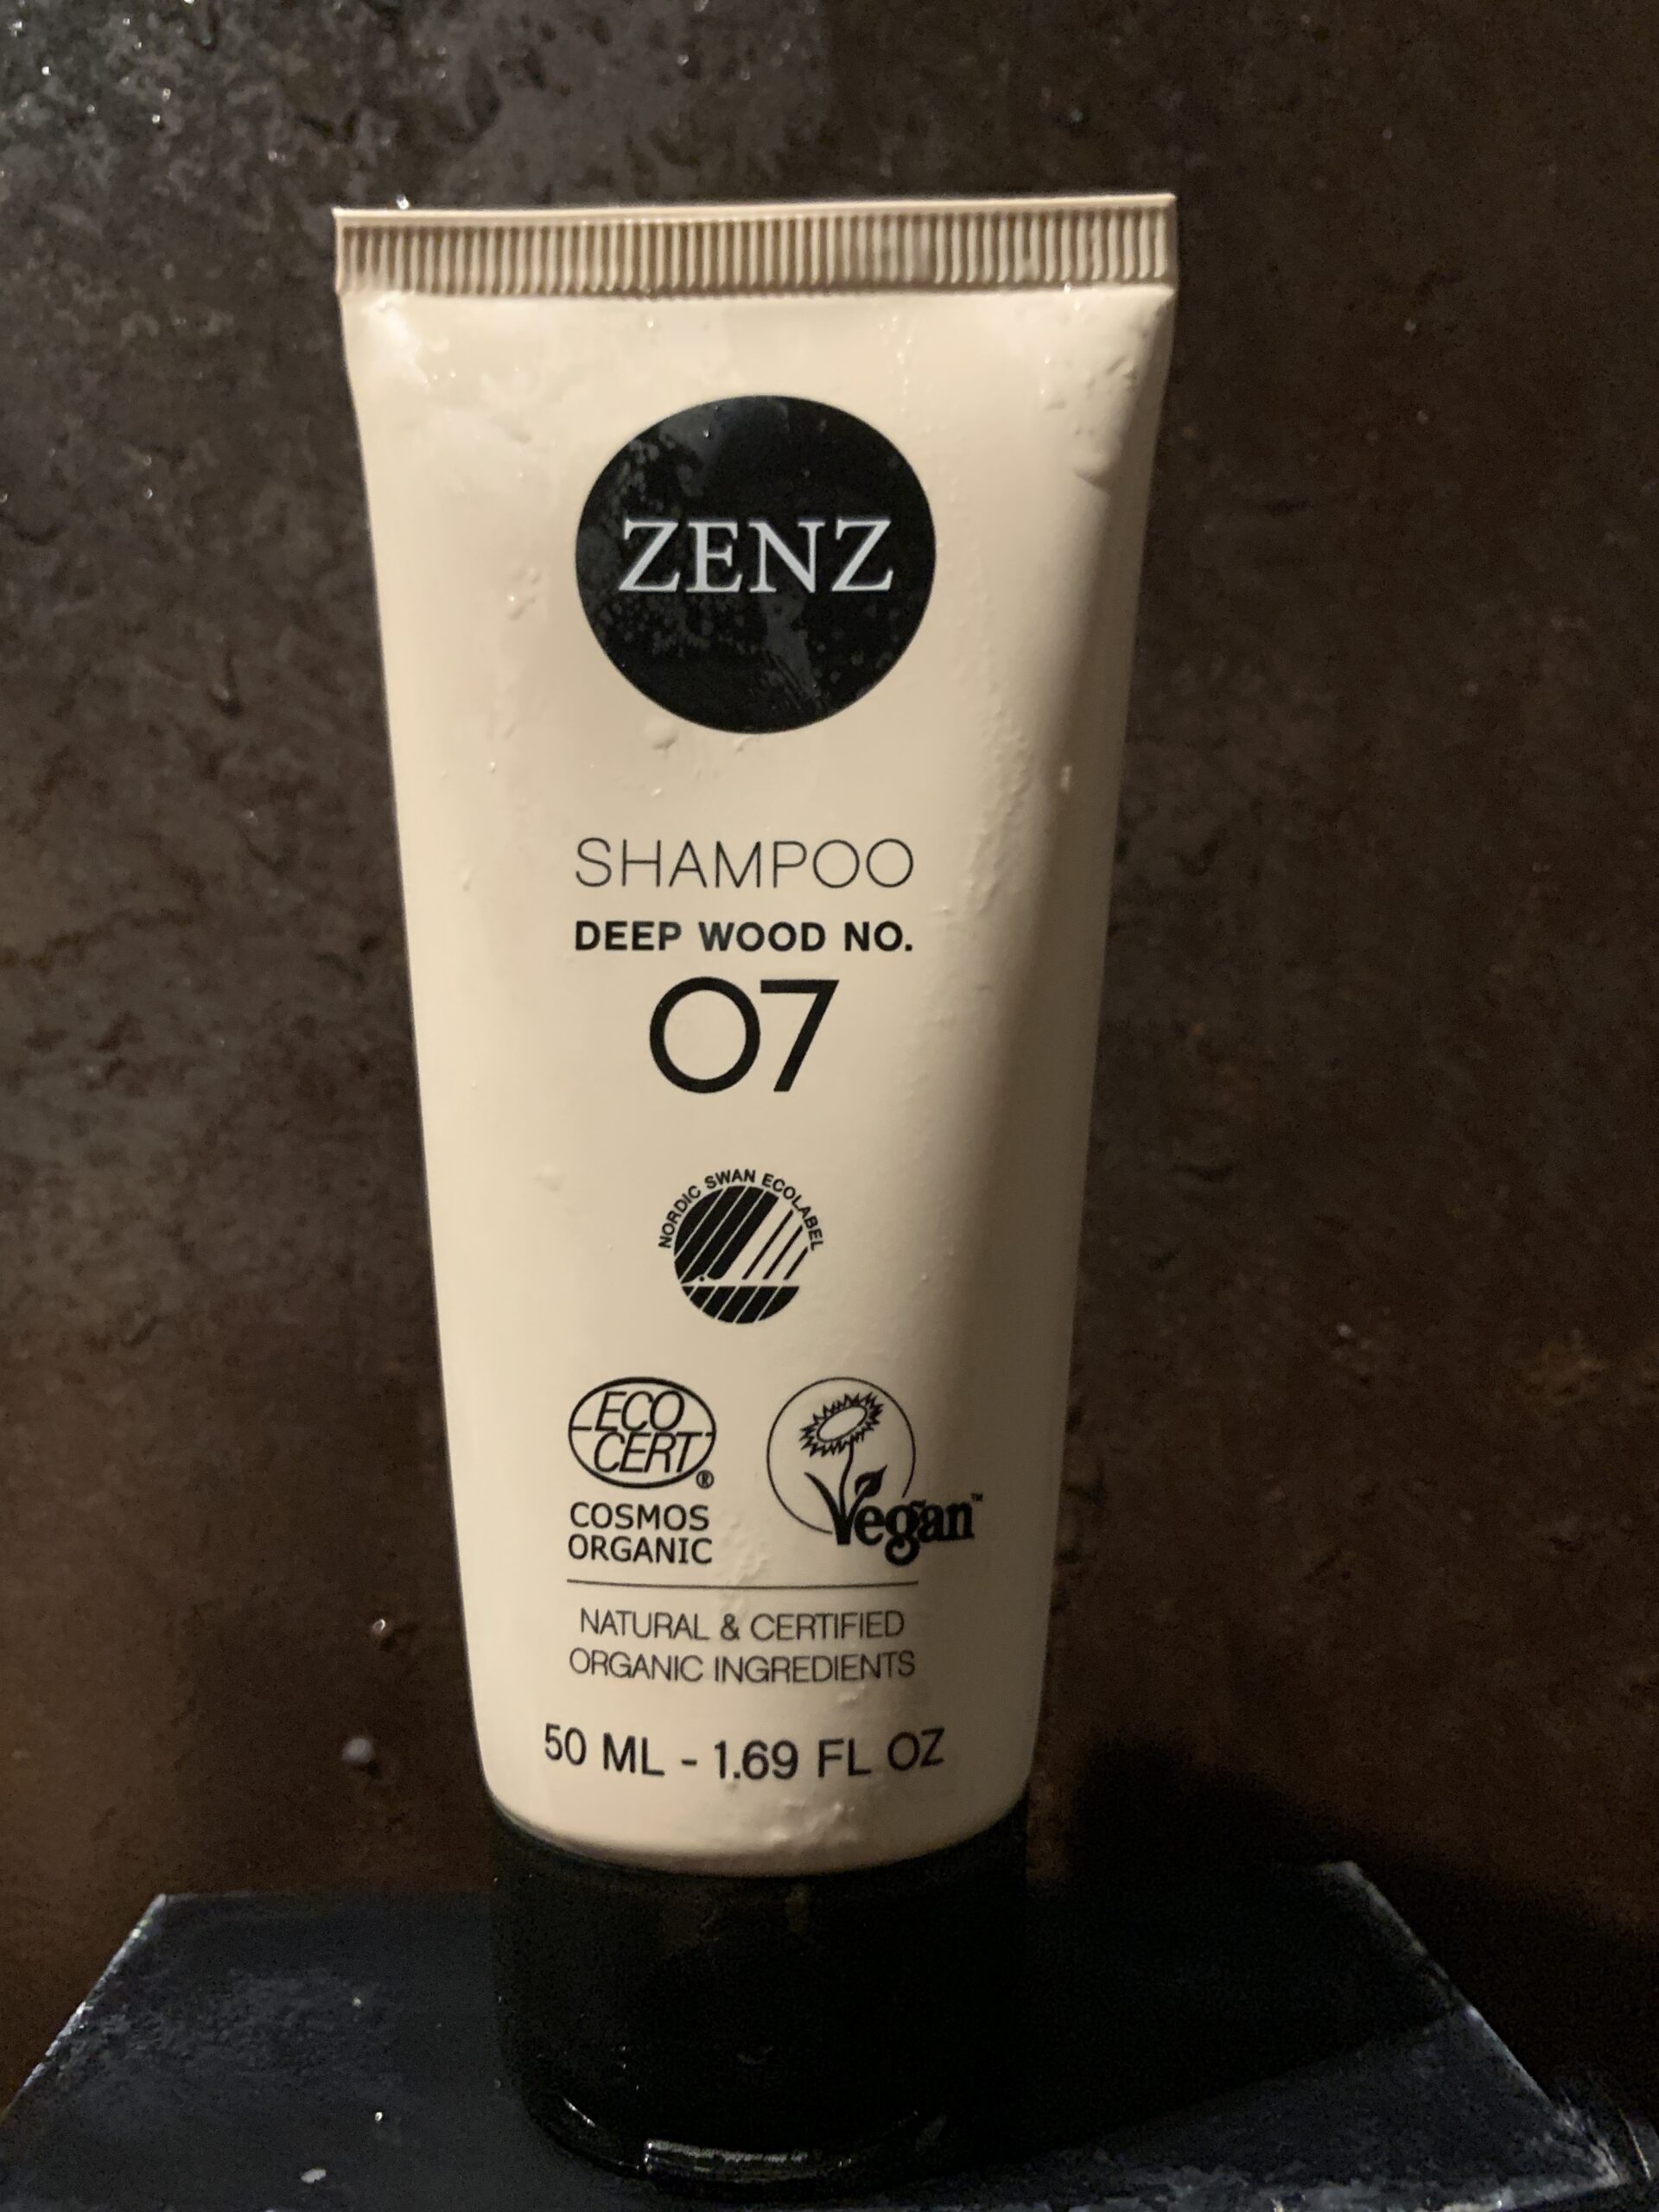 Zenz shampoo deep wood no 07